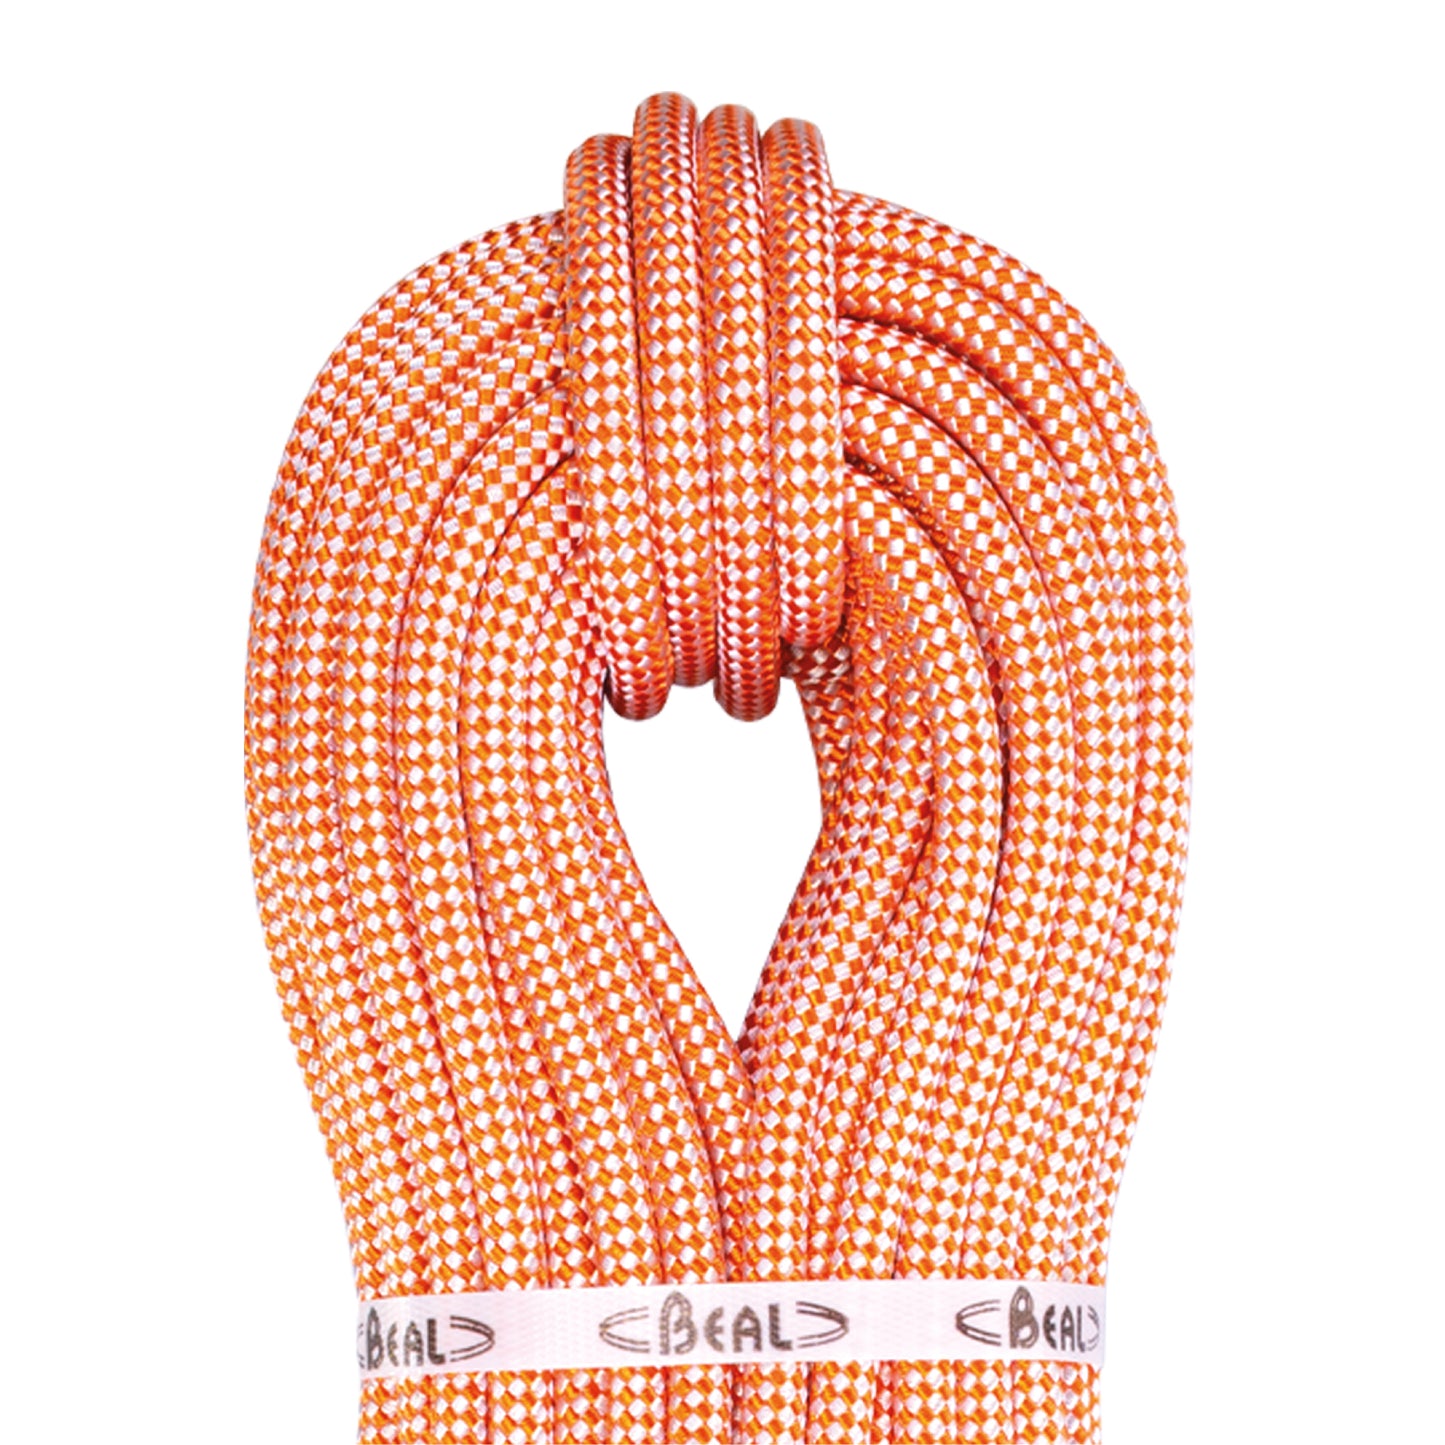 Beal INDUSTRIE 11mm Semi Static Rope